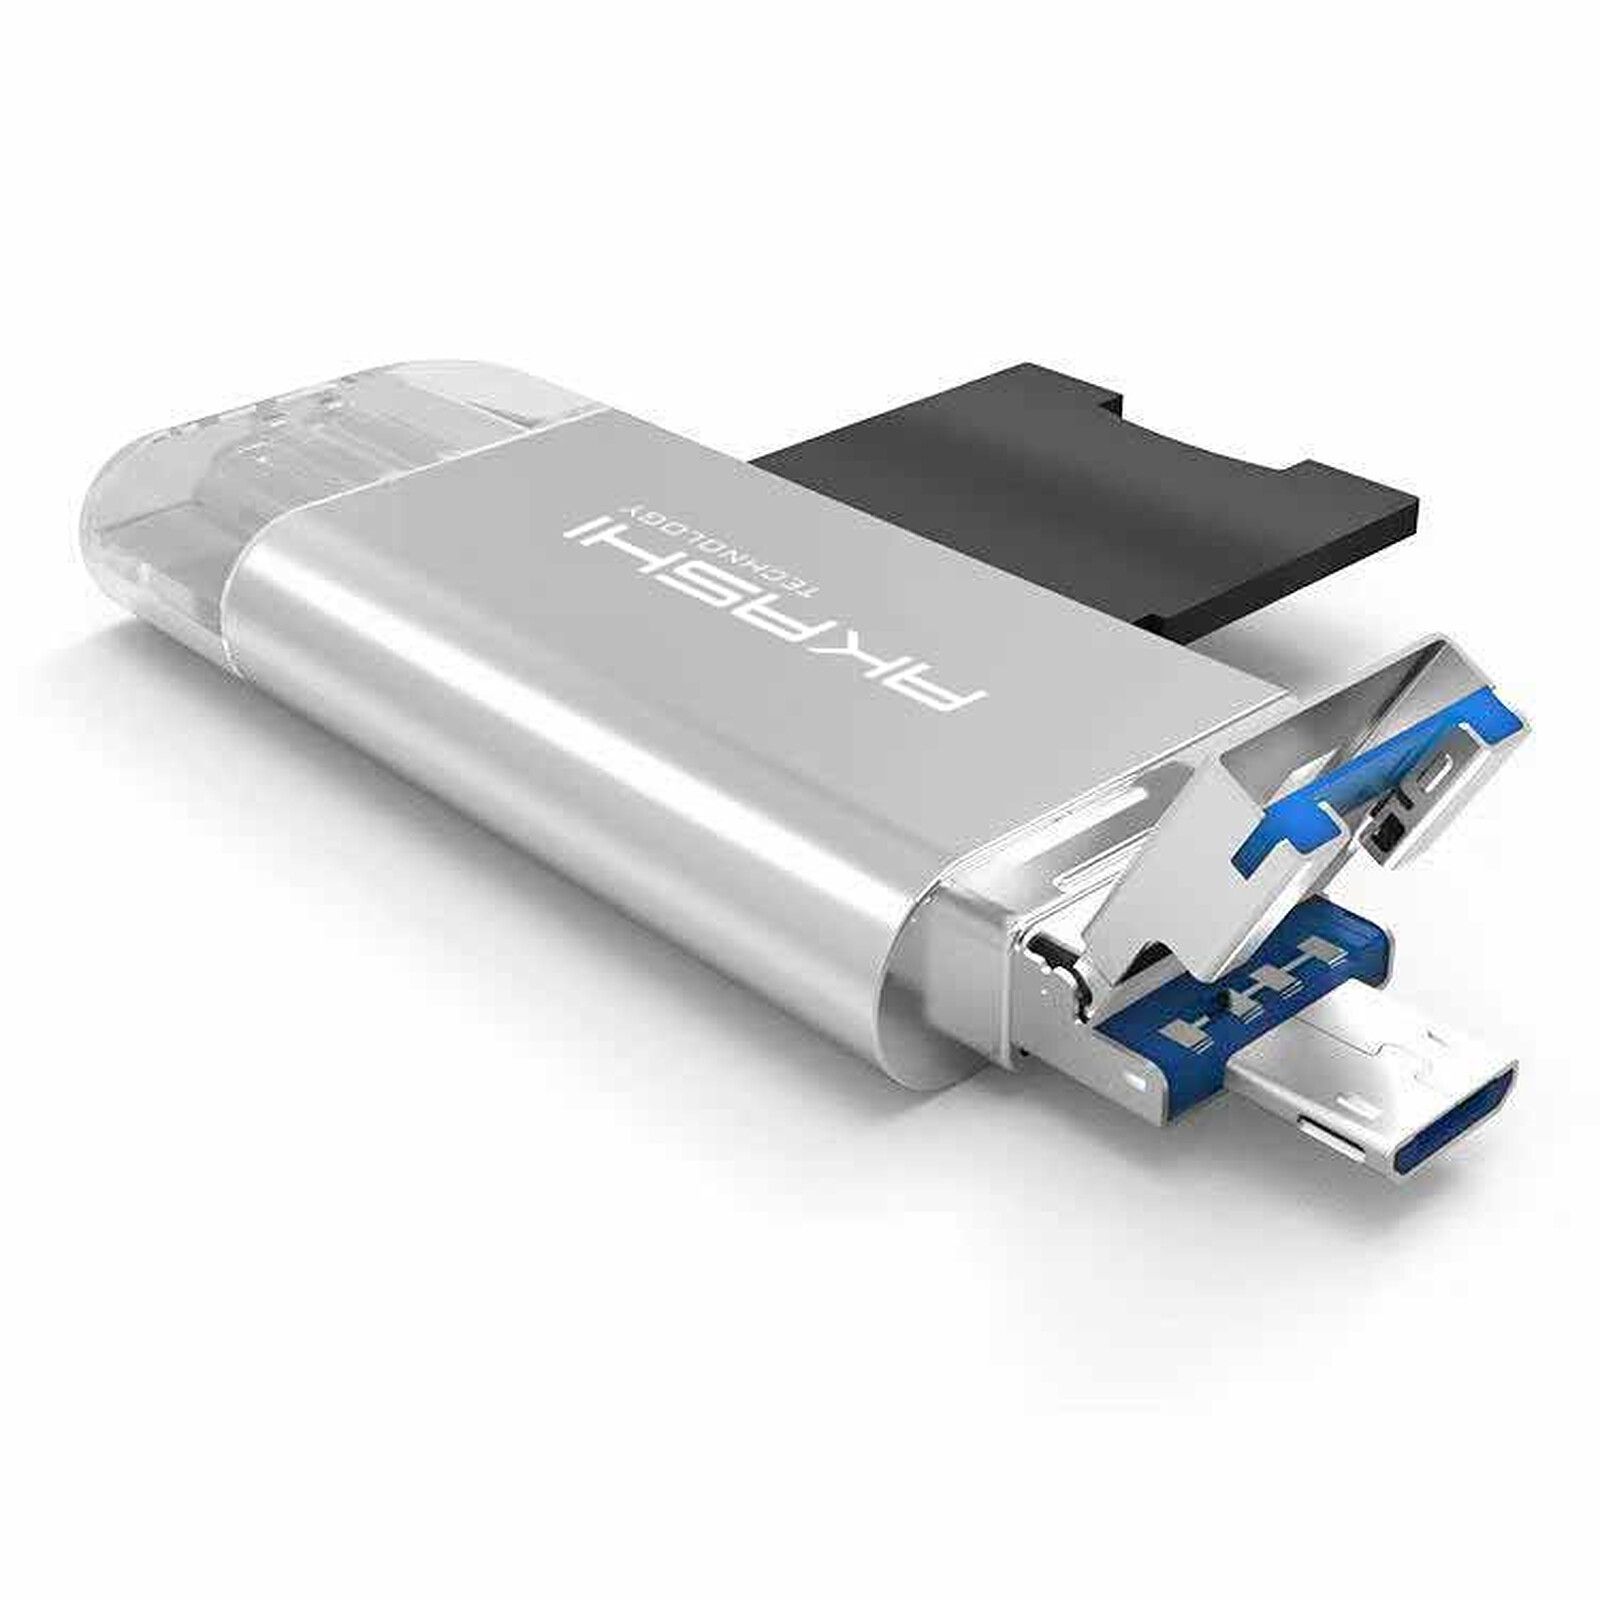 Acheter 3 en 1 USB 3.0 Micro USB Type C lecteur de carte SDHC SD